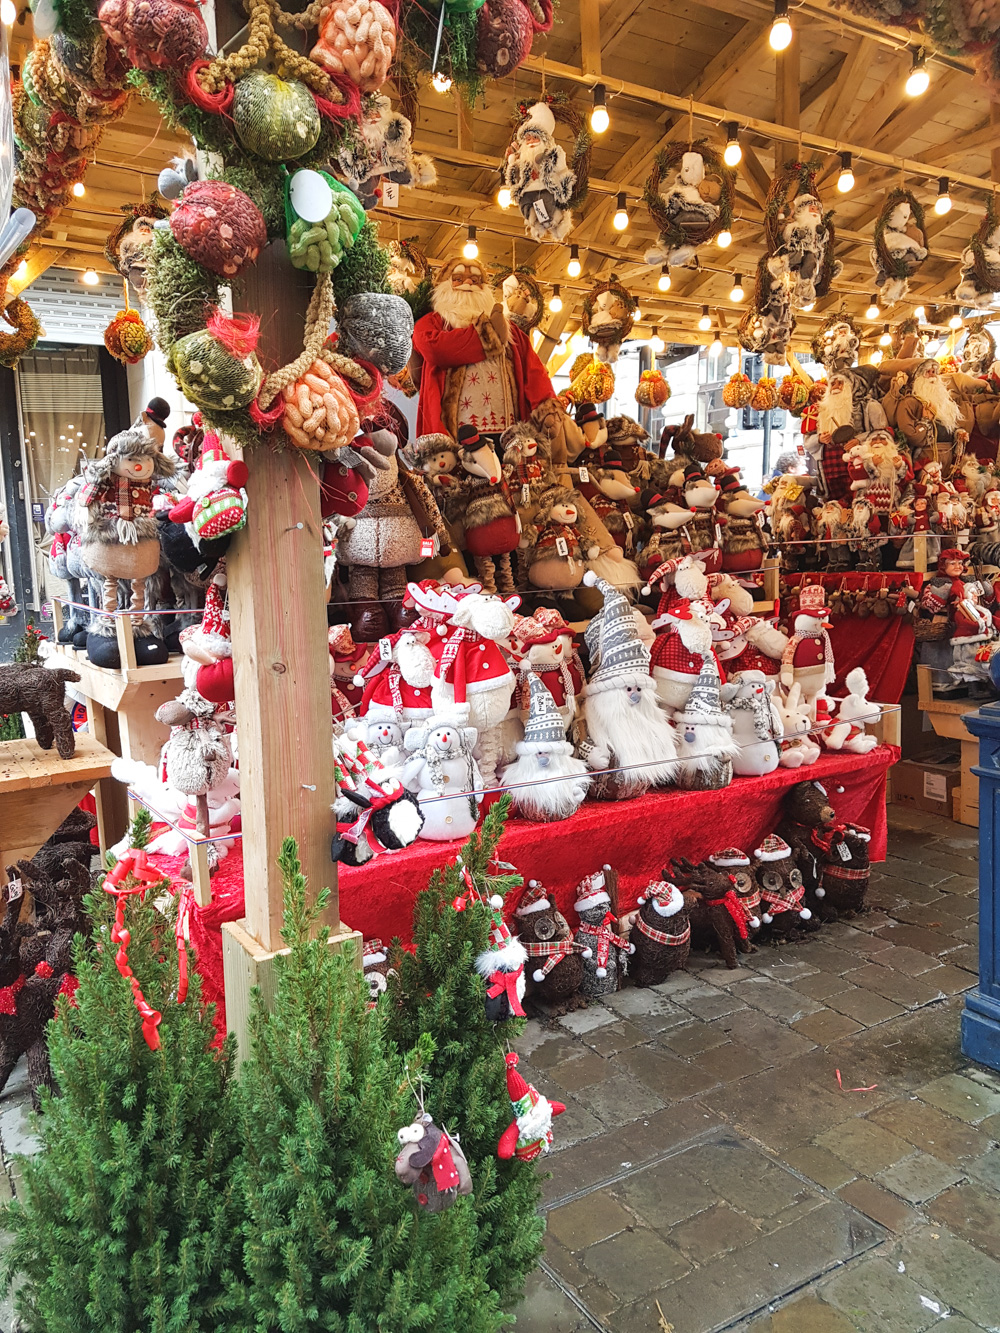 Manchester Christmas Markets